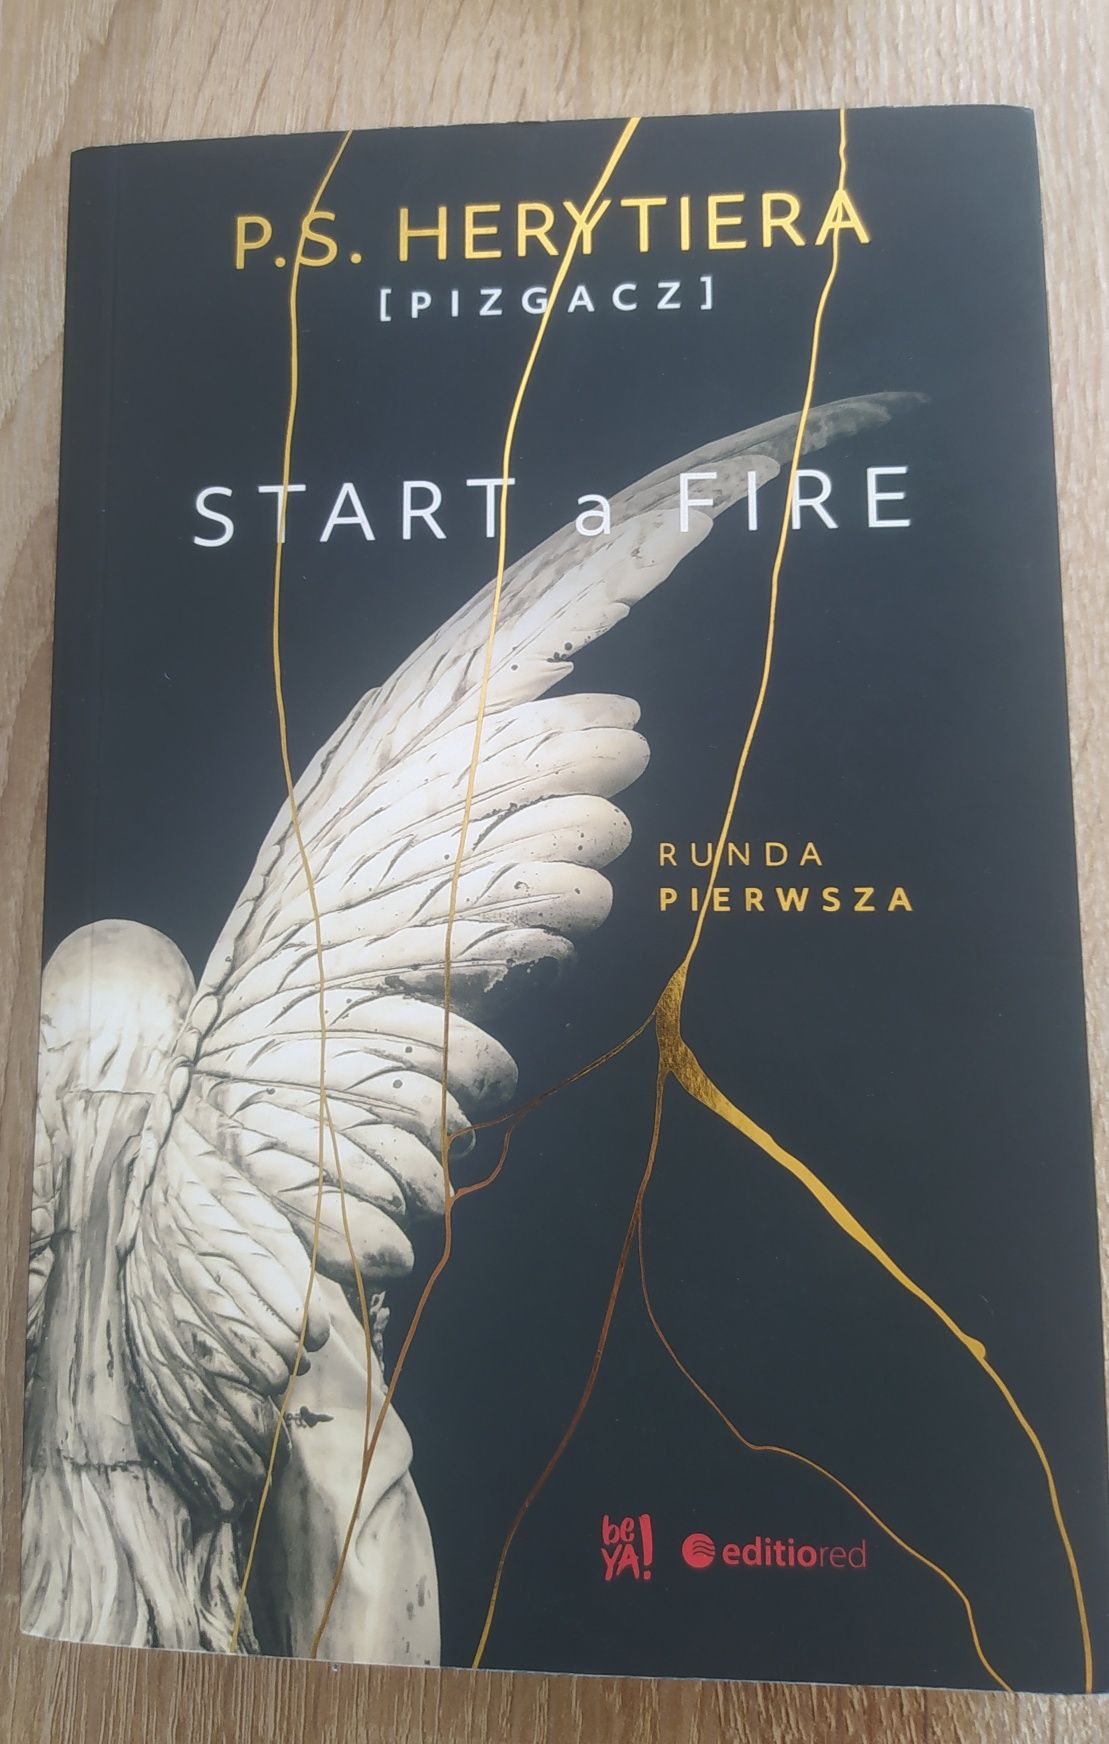 Książka "Start a Fire"